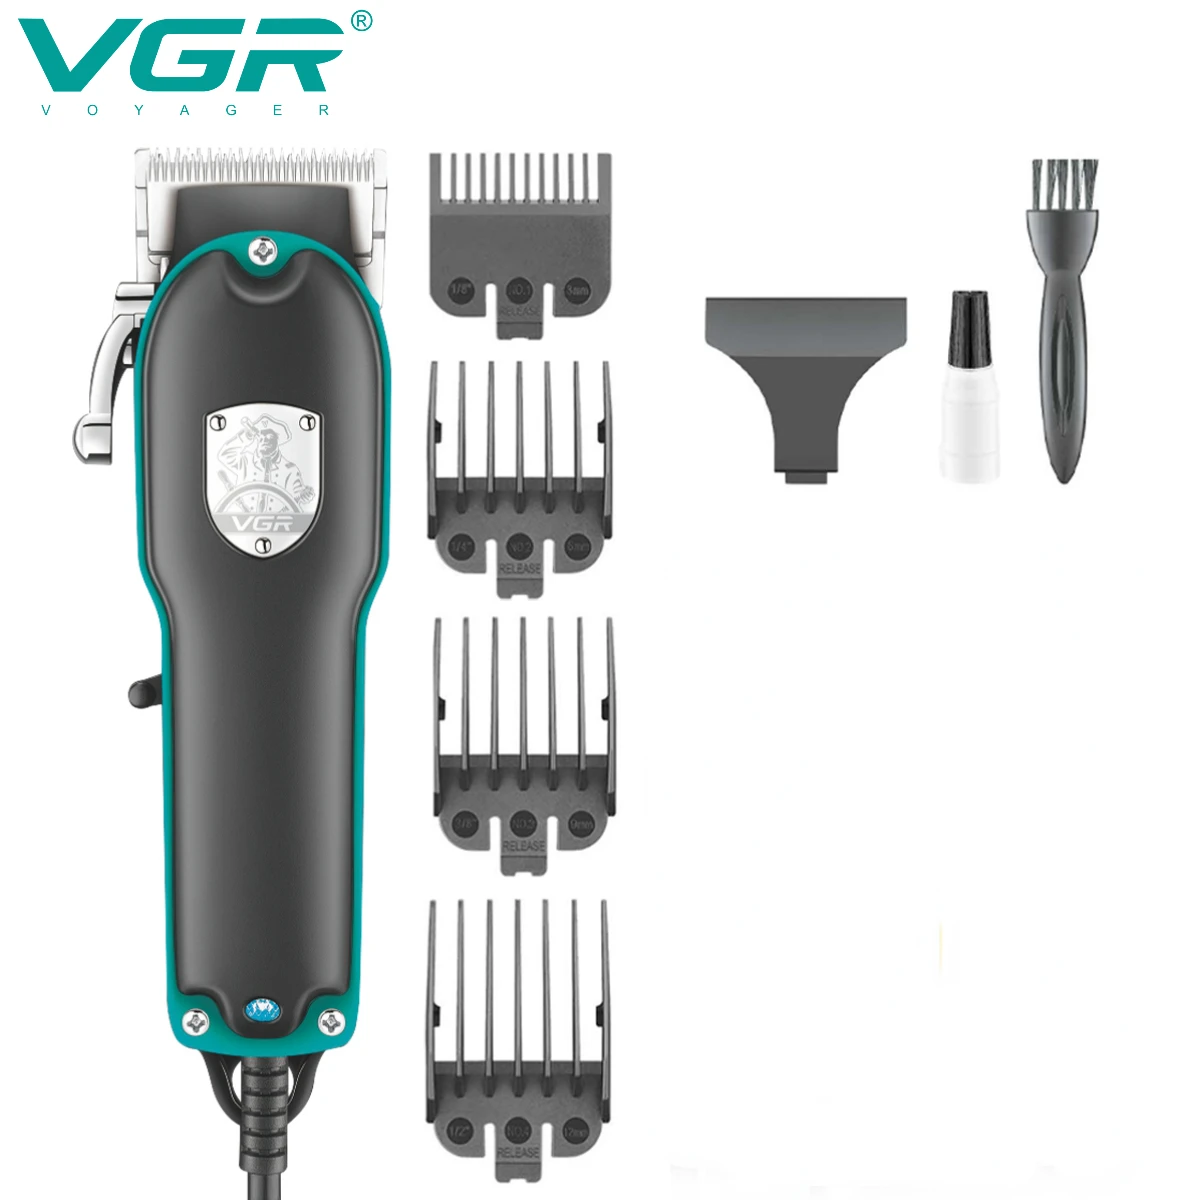 

VGR Hair Cutting Machine Professional Hair Clipper Electric Hair Clipper Wired Haircut Machine Barber Home Trimmer for Men V-123